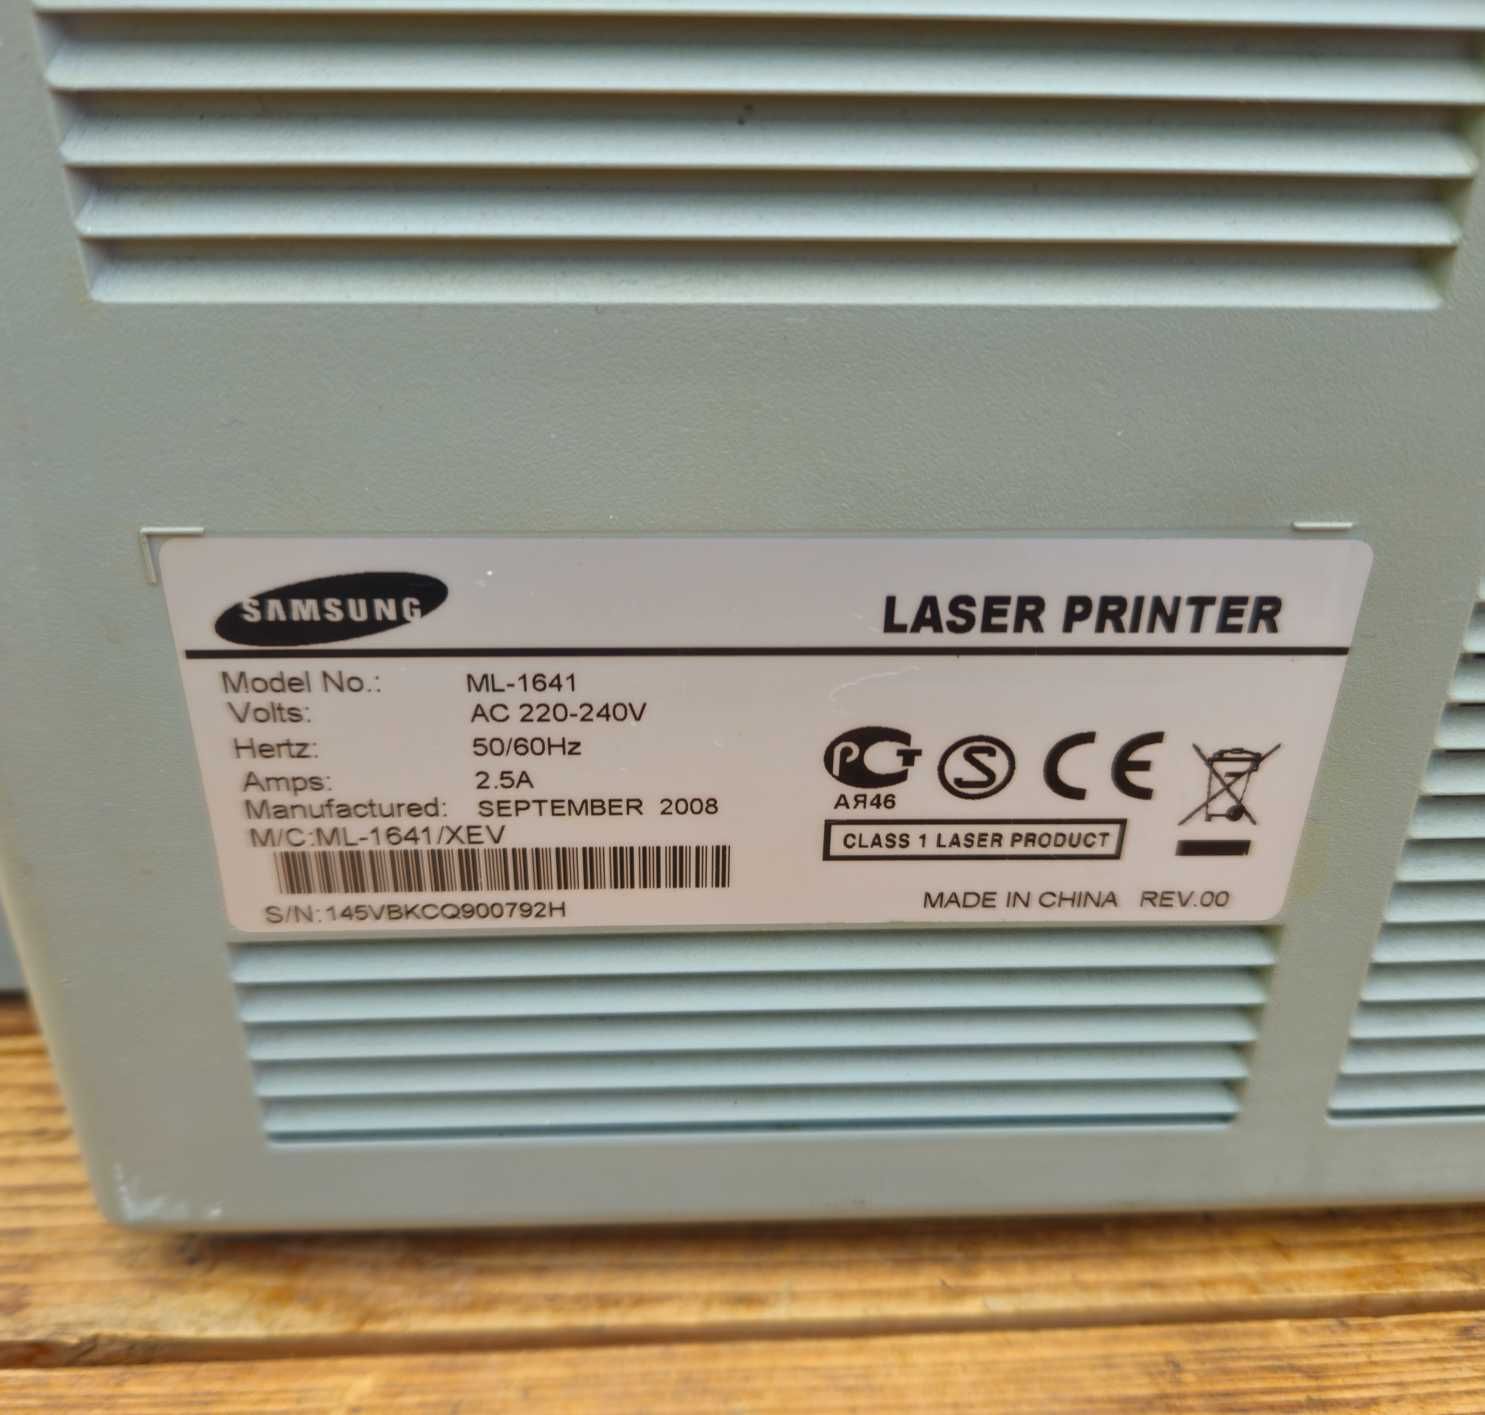 Samsung ML-1641 Laser Printer